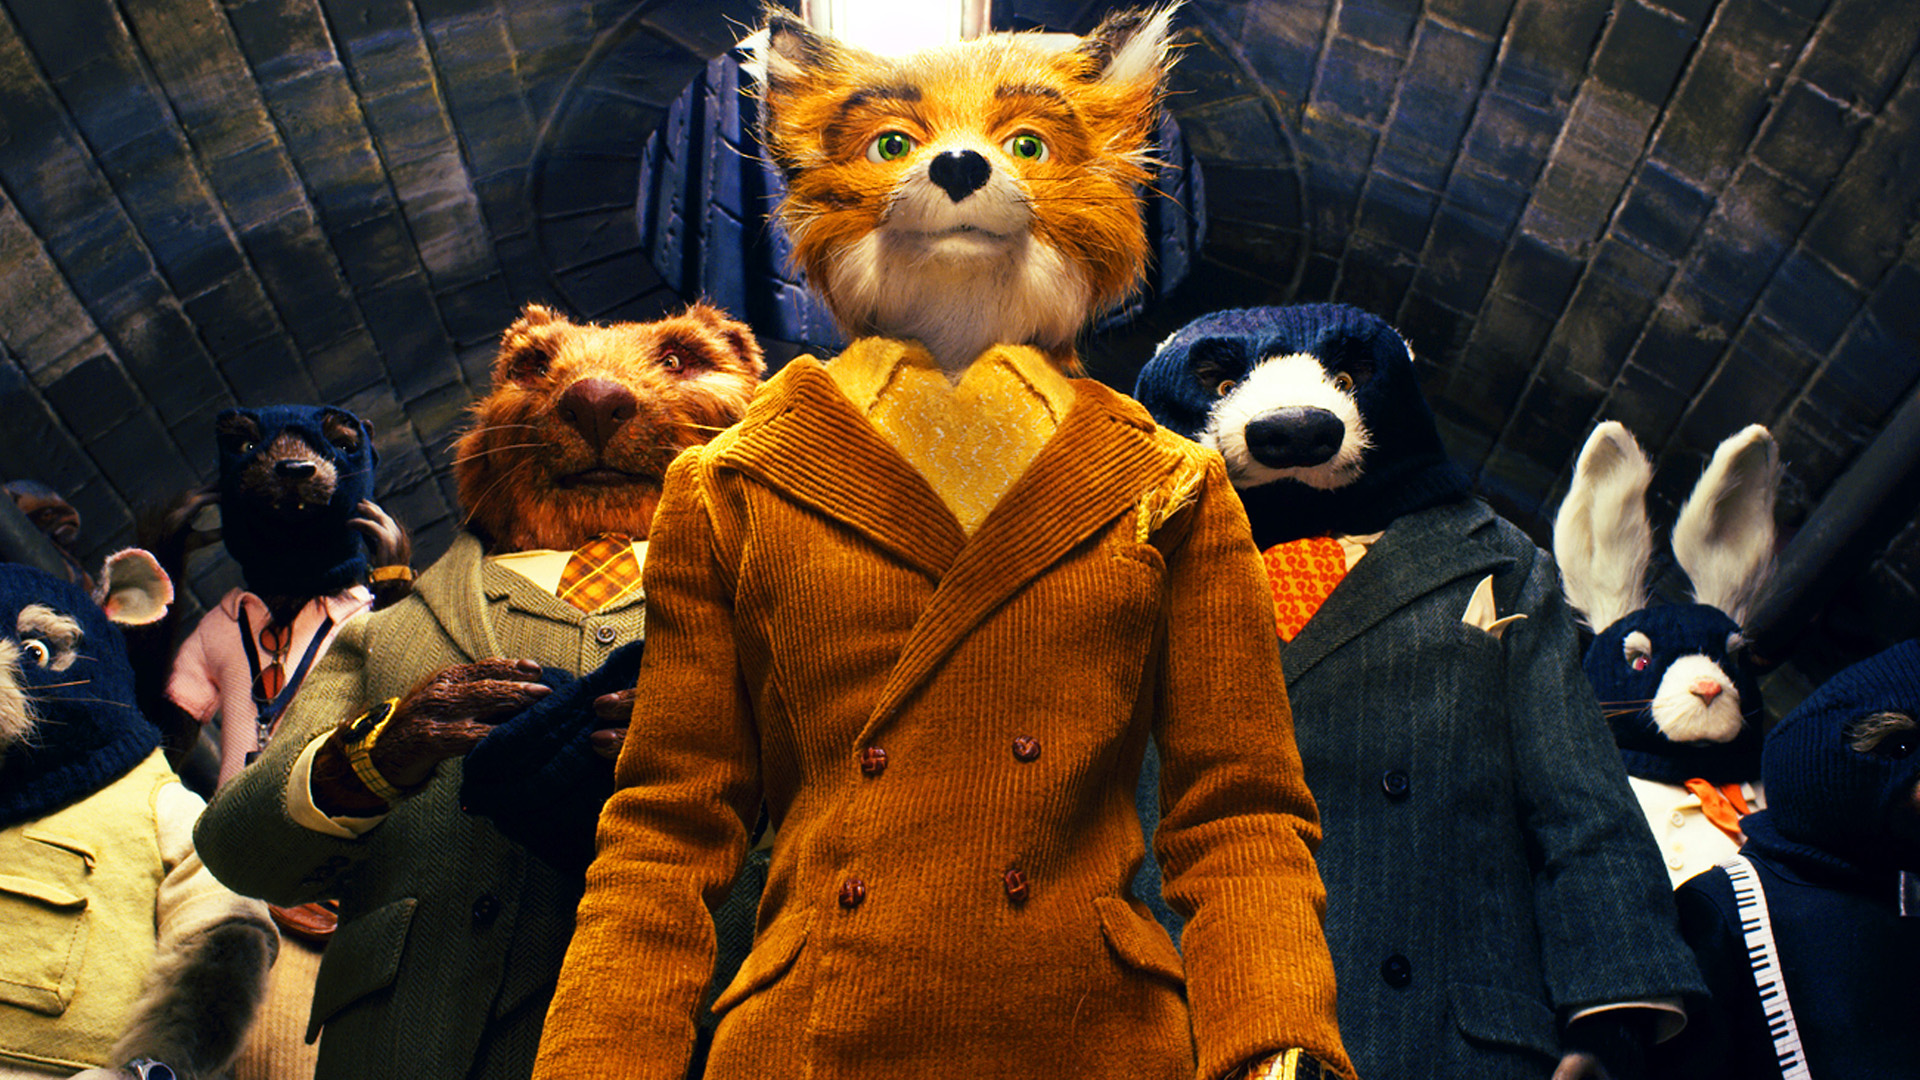 movie, fantastic mr fox